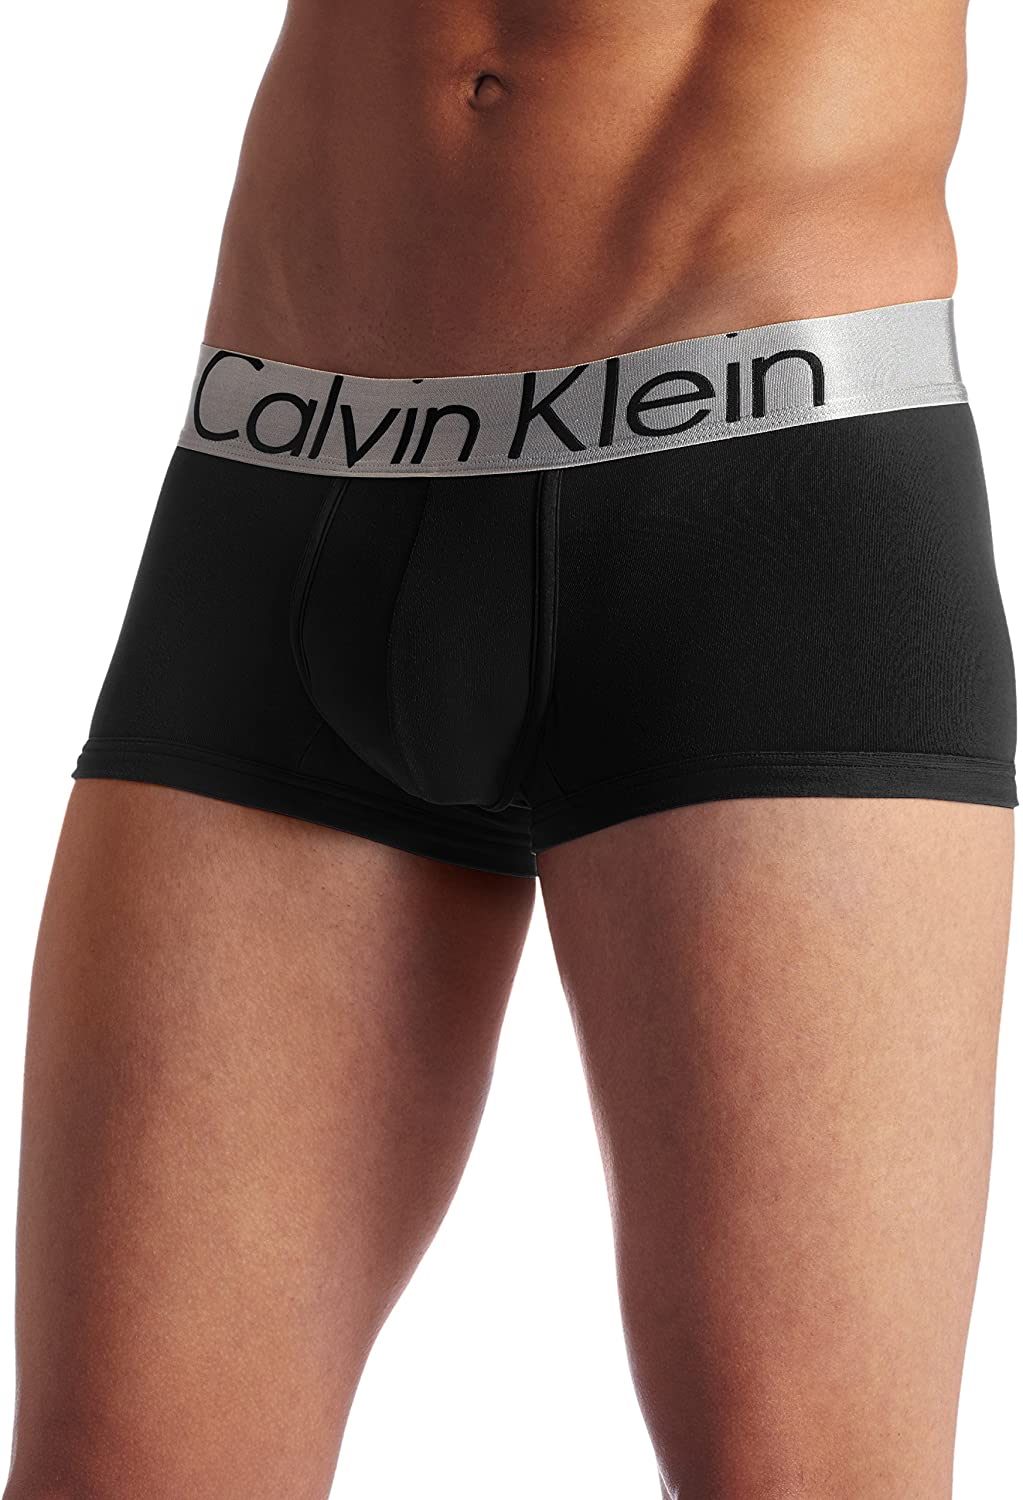 Calvin Klein Men's Steel Micro Low Rise Trunks Underpants